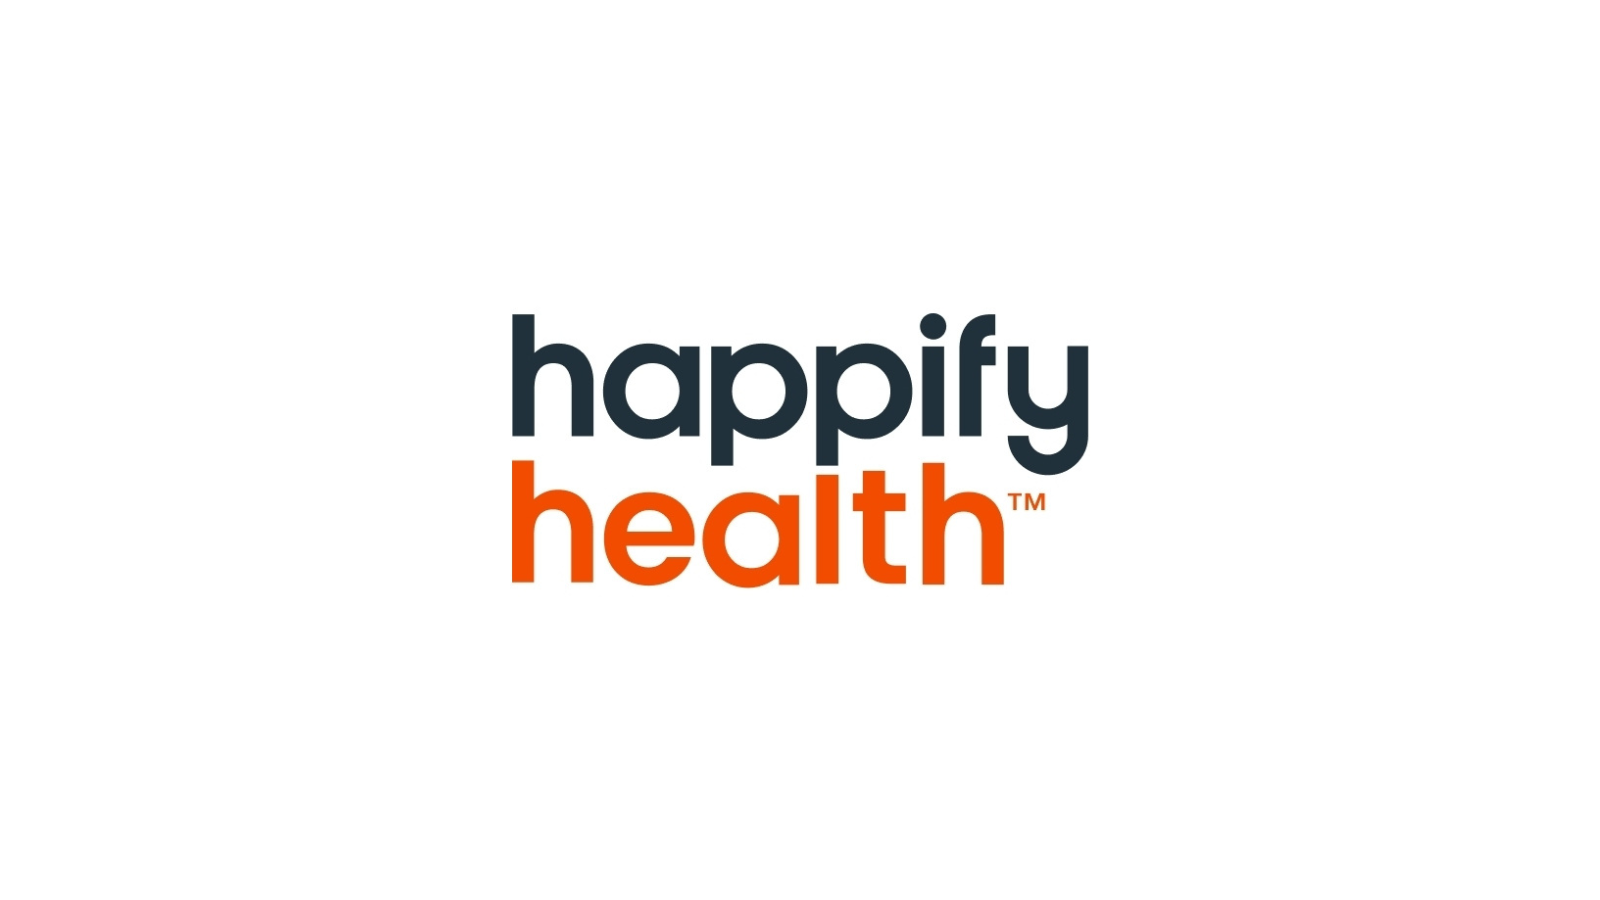 Happify Health Raises $73 Million to Advance and Expand Digital Health Platform